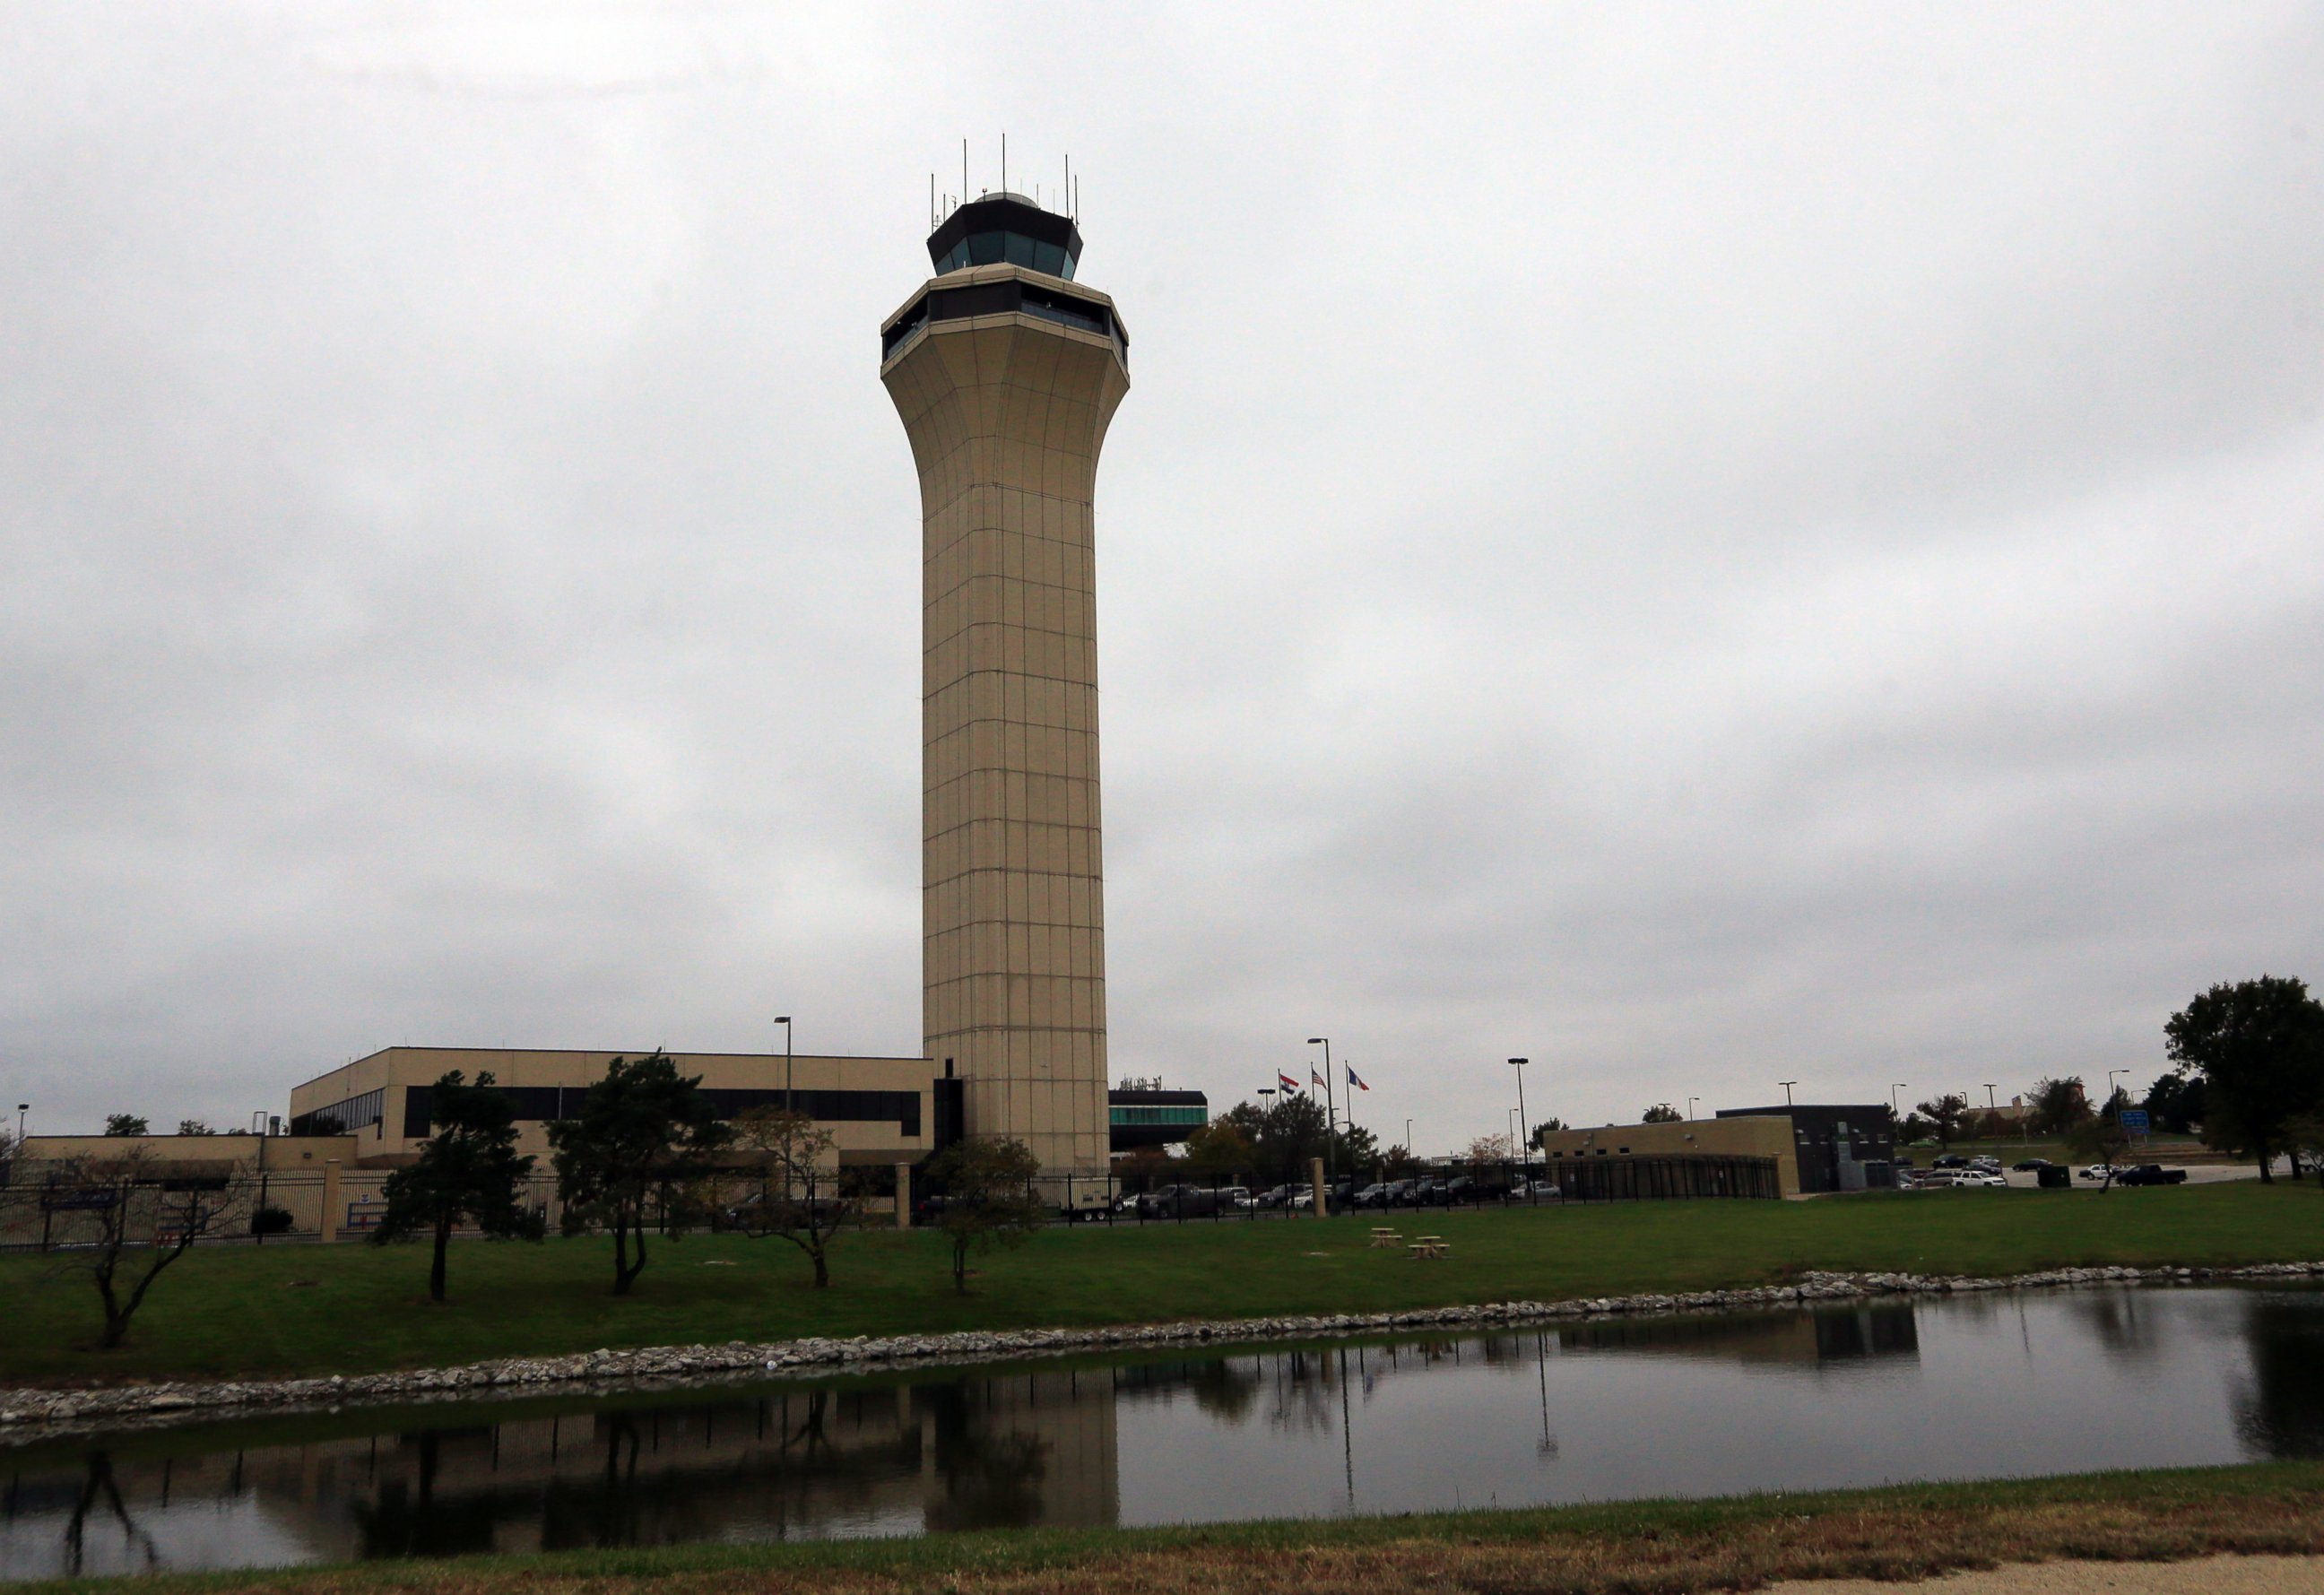 PHOTO: The control tower watches ground traffic at Kansas City International Airport in Kansas City, Mo., Wednesday, Nov. 1, 2017.